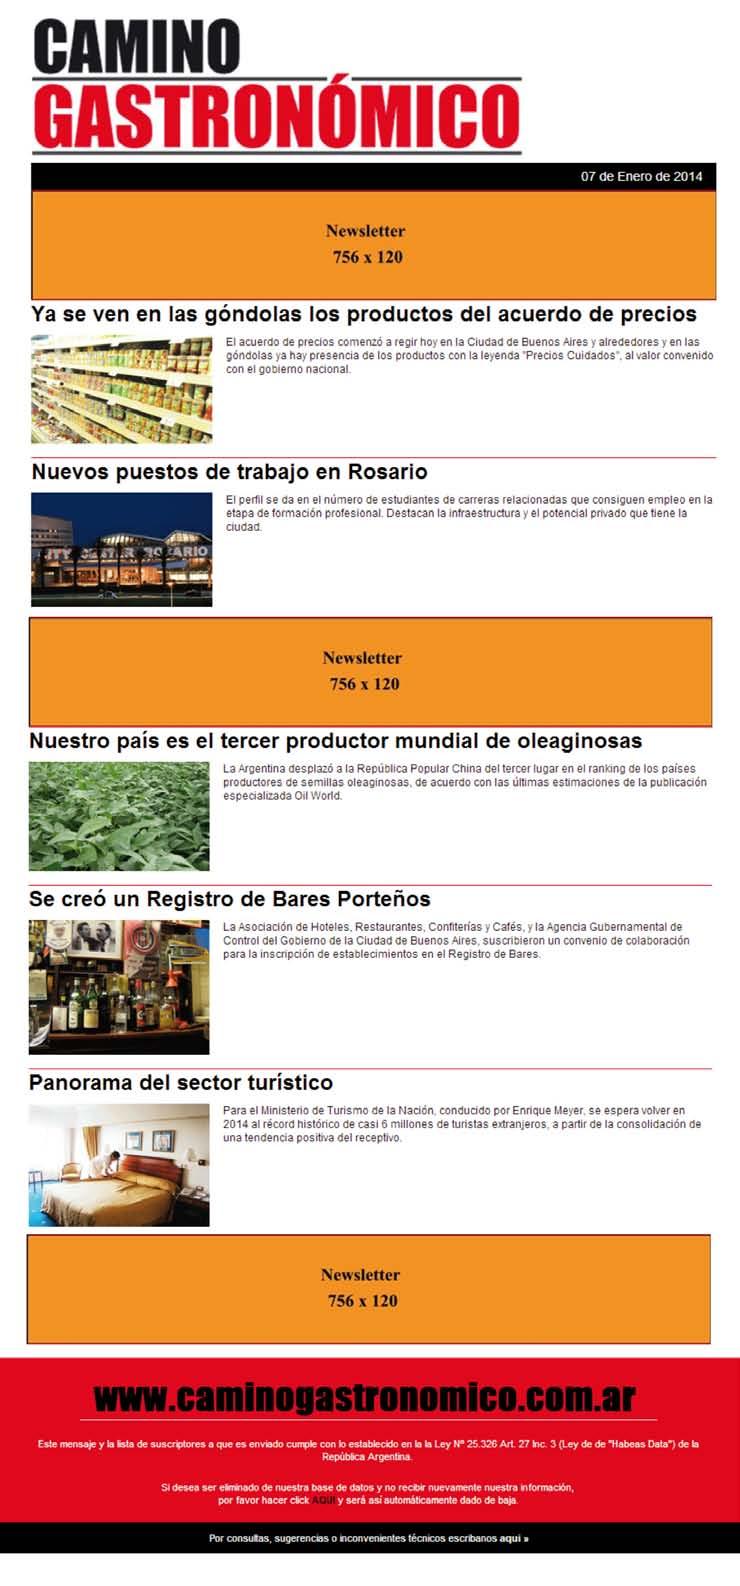 6 MEDIAKIT Newsletter - Tarifa expresada en pesos argentinos. - Corresponde a un aviso por cada envío semanal del Newsletter de Camino Gastronómico.